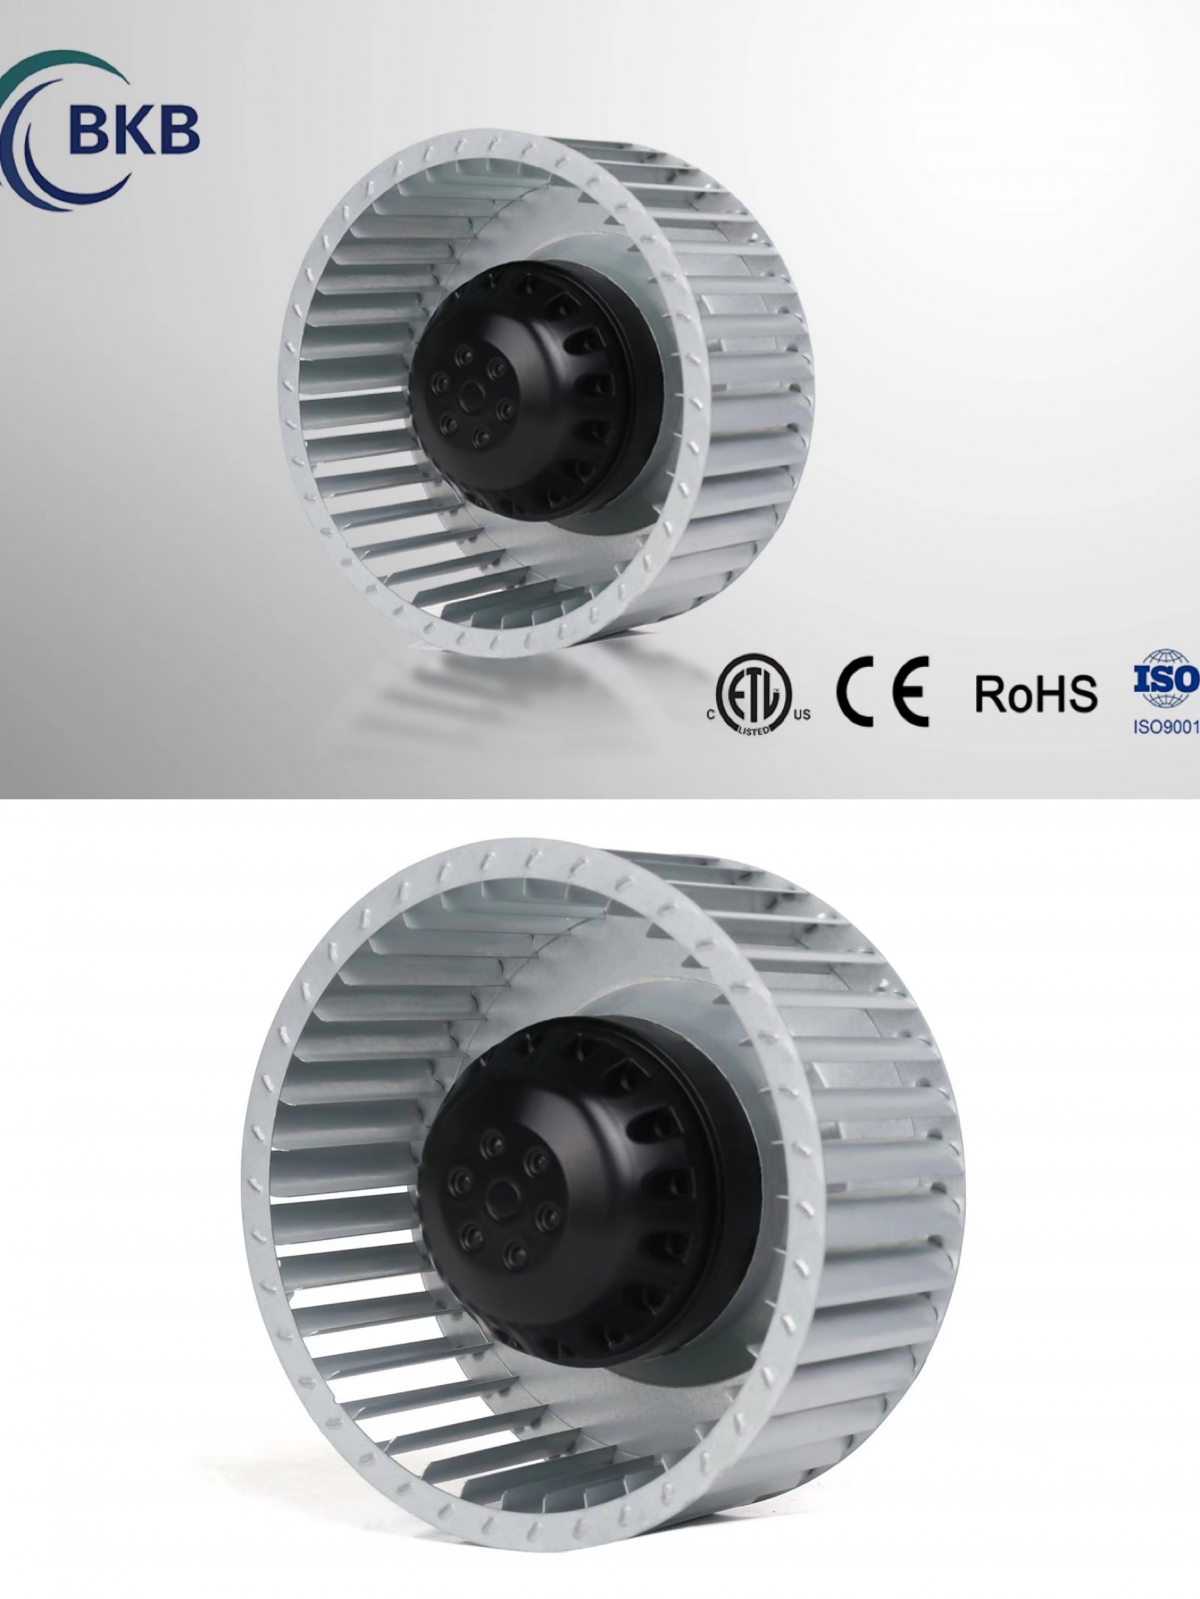 ETL APPROVED Steel forward curved centrifugal fan 160 SUPPLIER AND FACTORY IN CHINA .-SUNLIGHT BLOWER,Centrifugal Fans, Inline Fans,Motors,Backward curved centrifugal fans ,Forward curved centrifugal fans ,inlet fans, EC fans